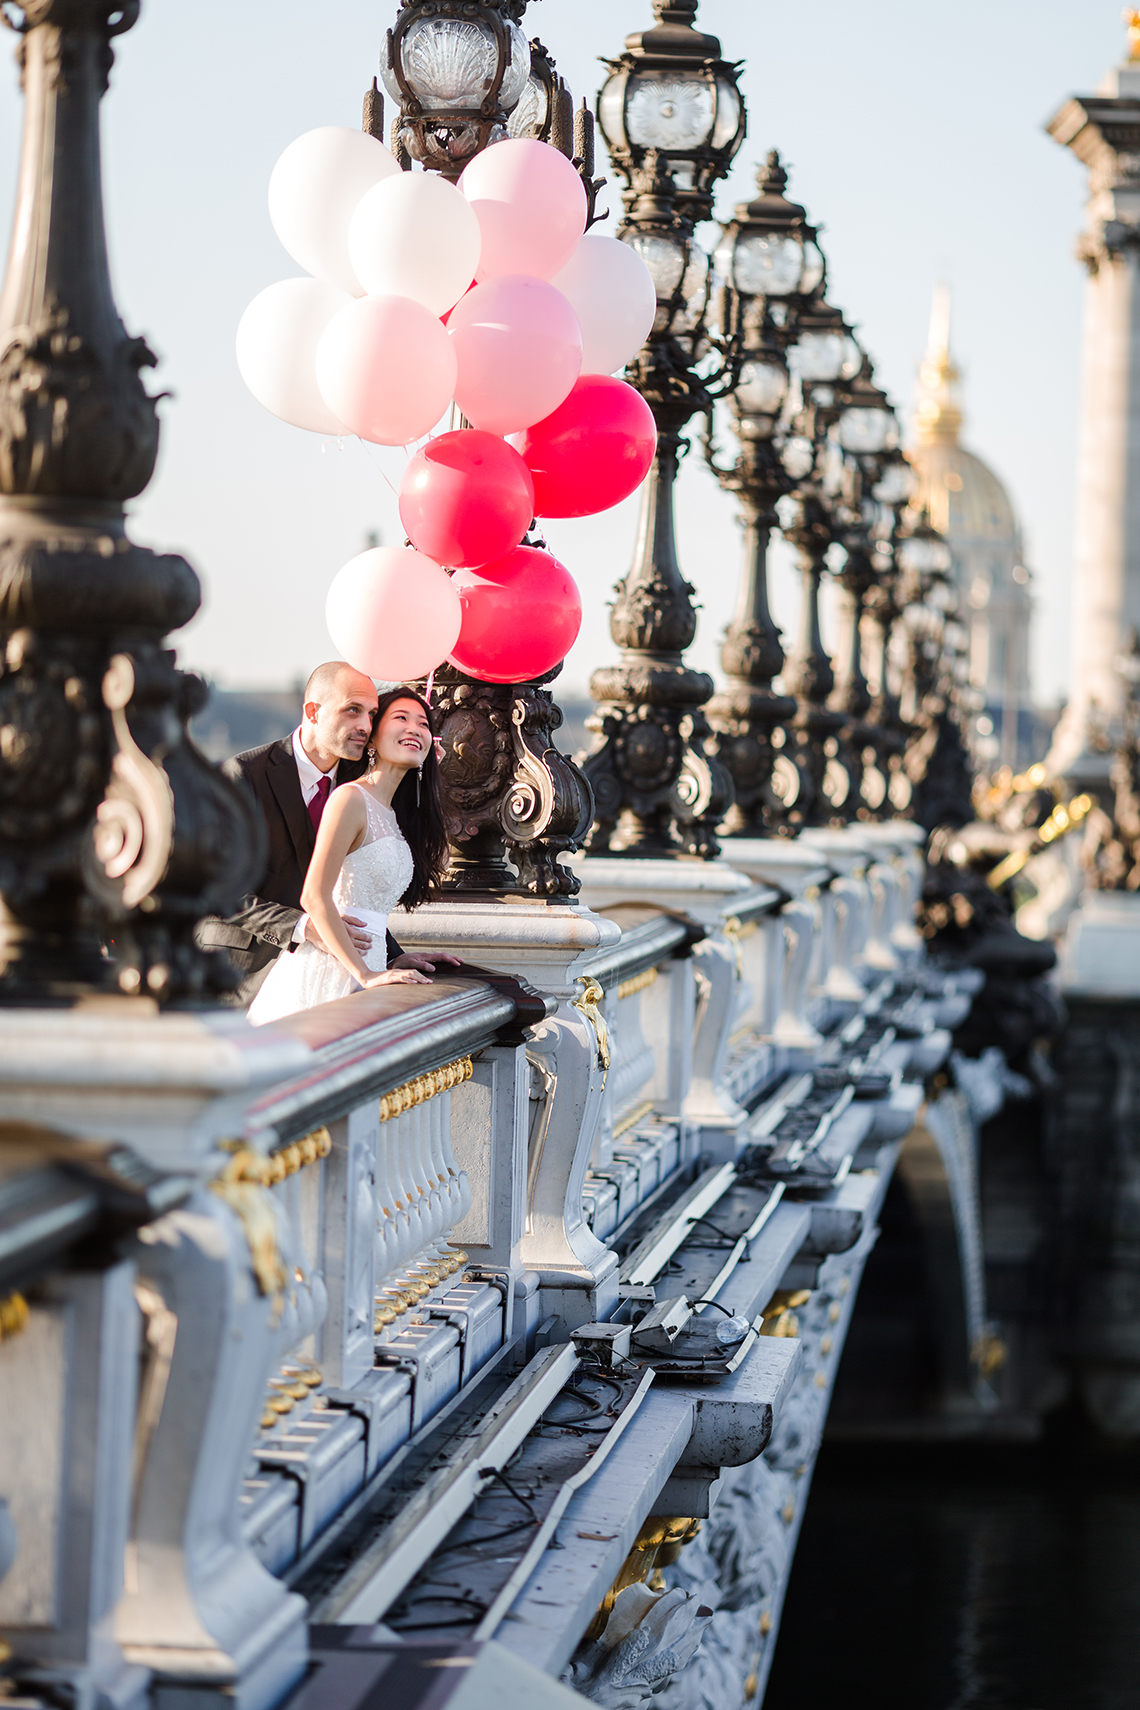 photographe mariage seance engagement paris ballon pont alexandre iii